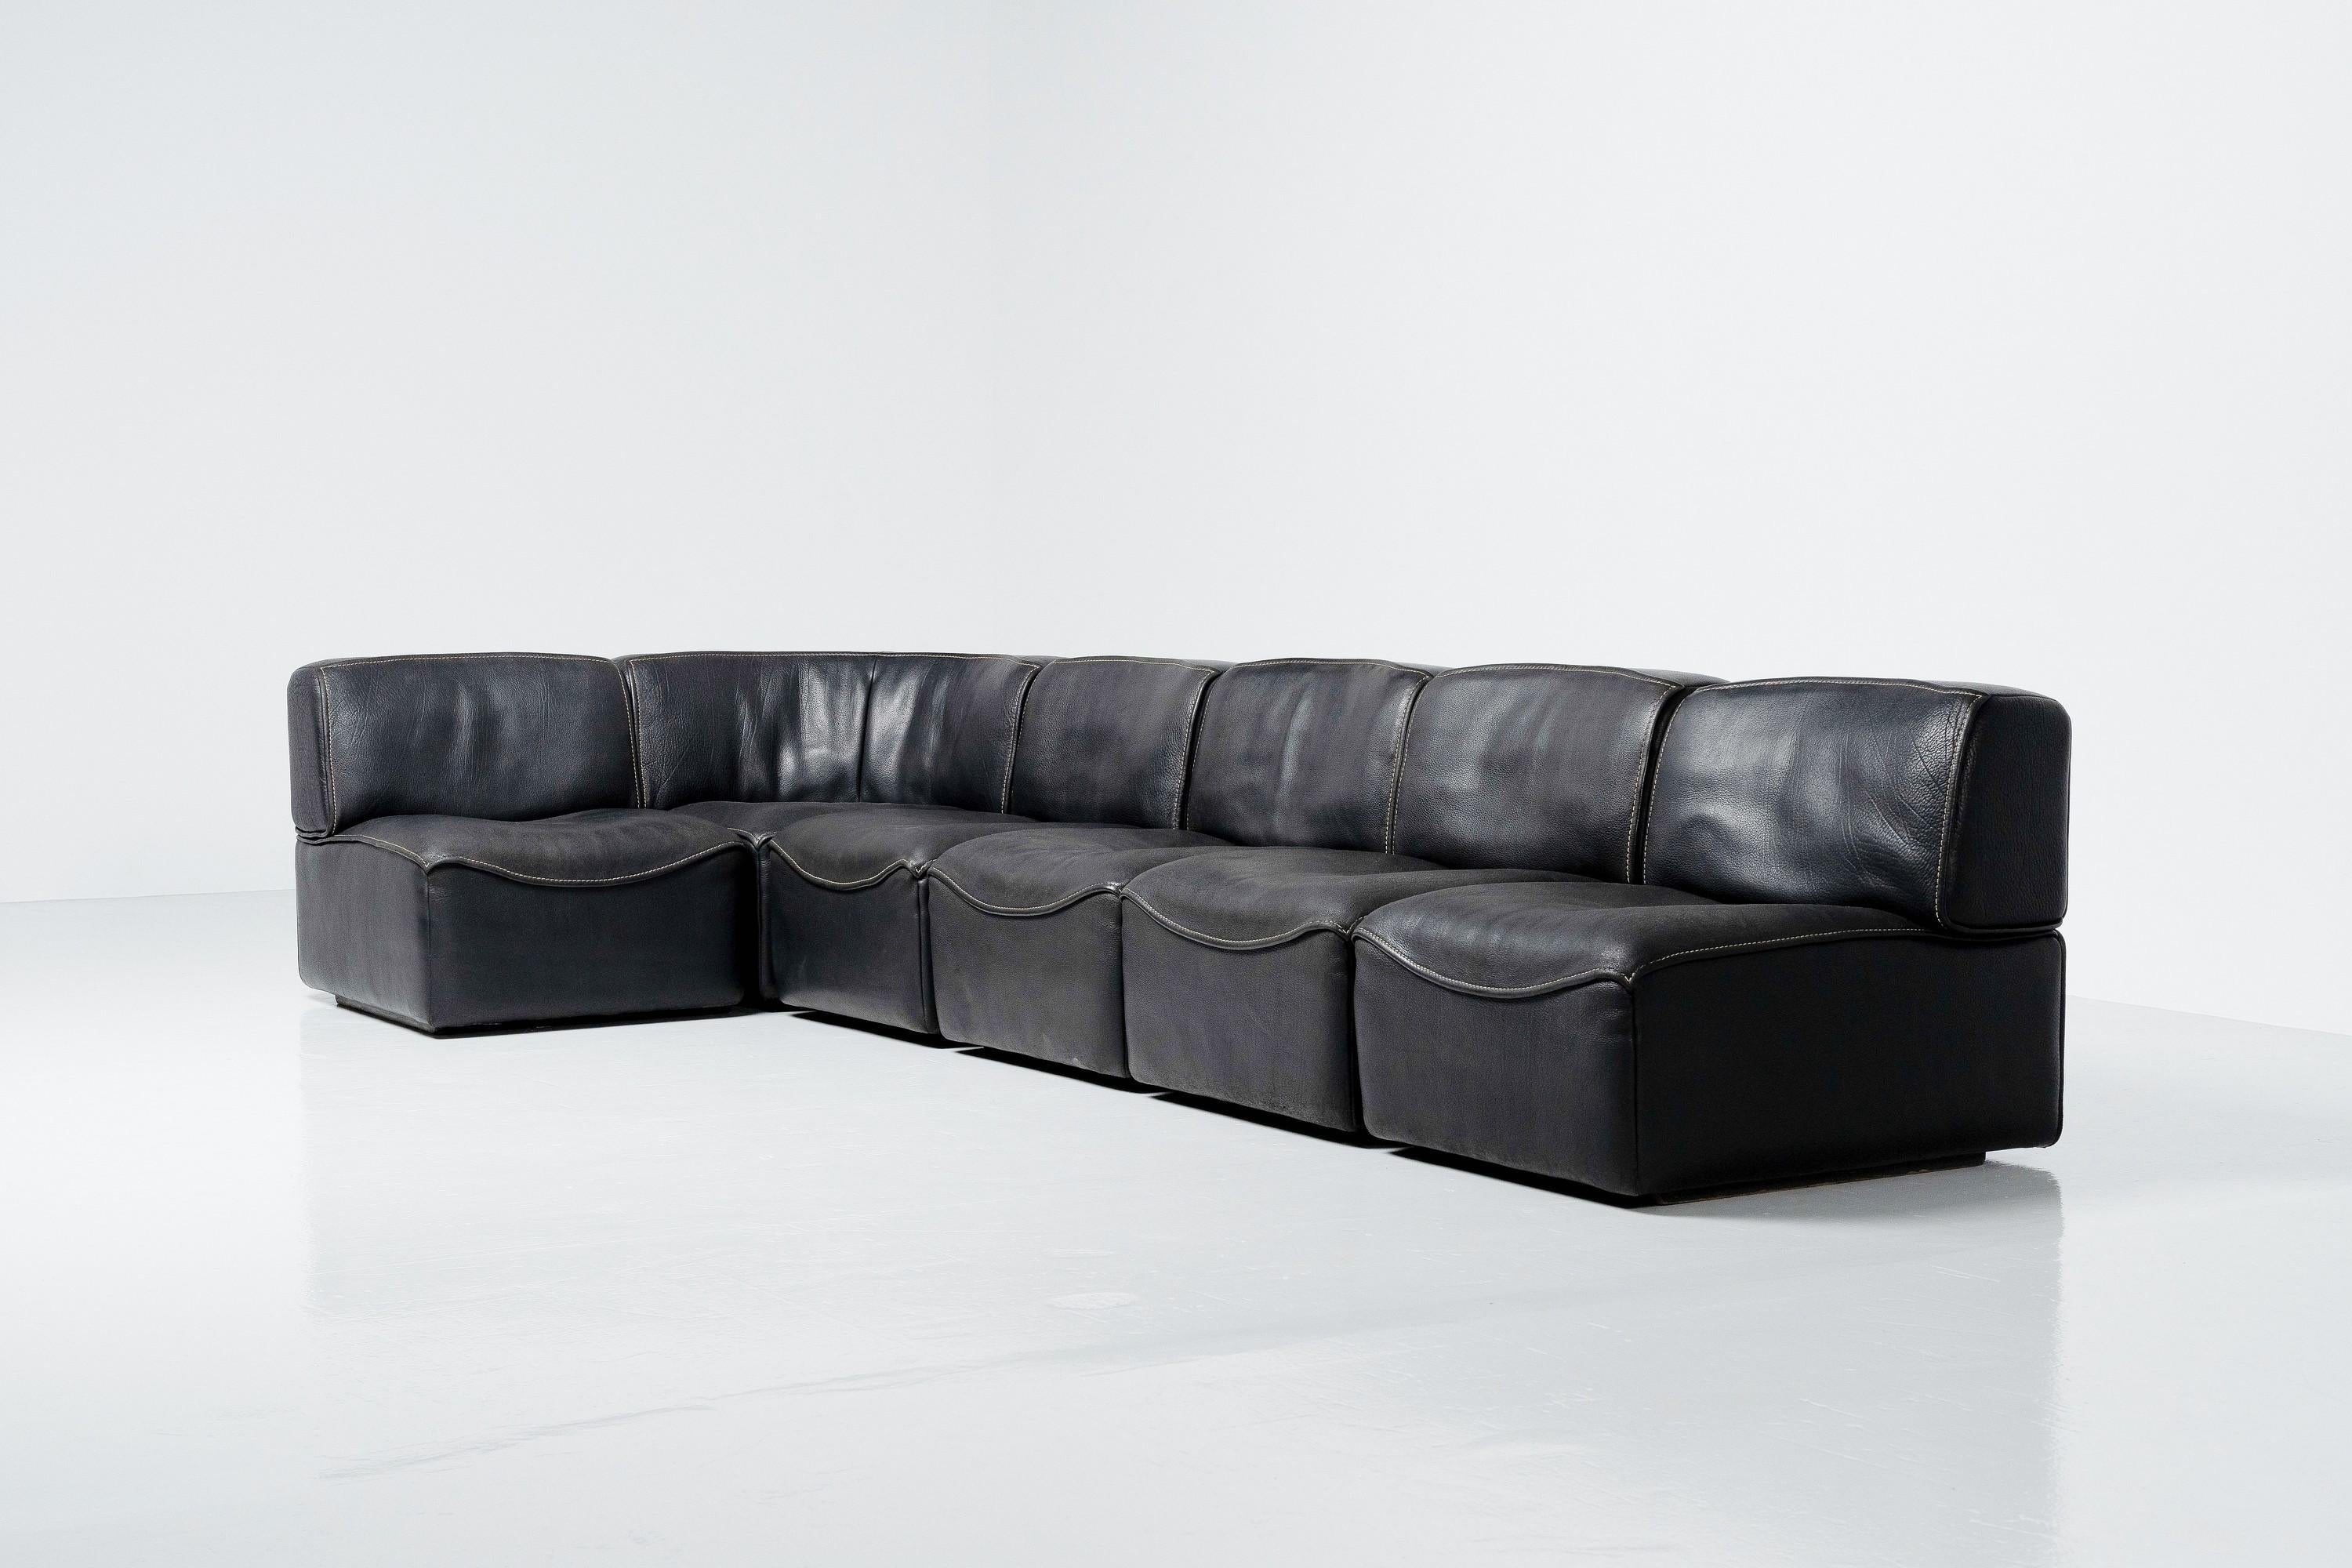 Swiss De Sede DS15 Sofa in Black Leather Switzerland 1970